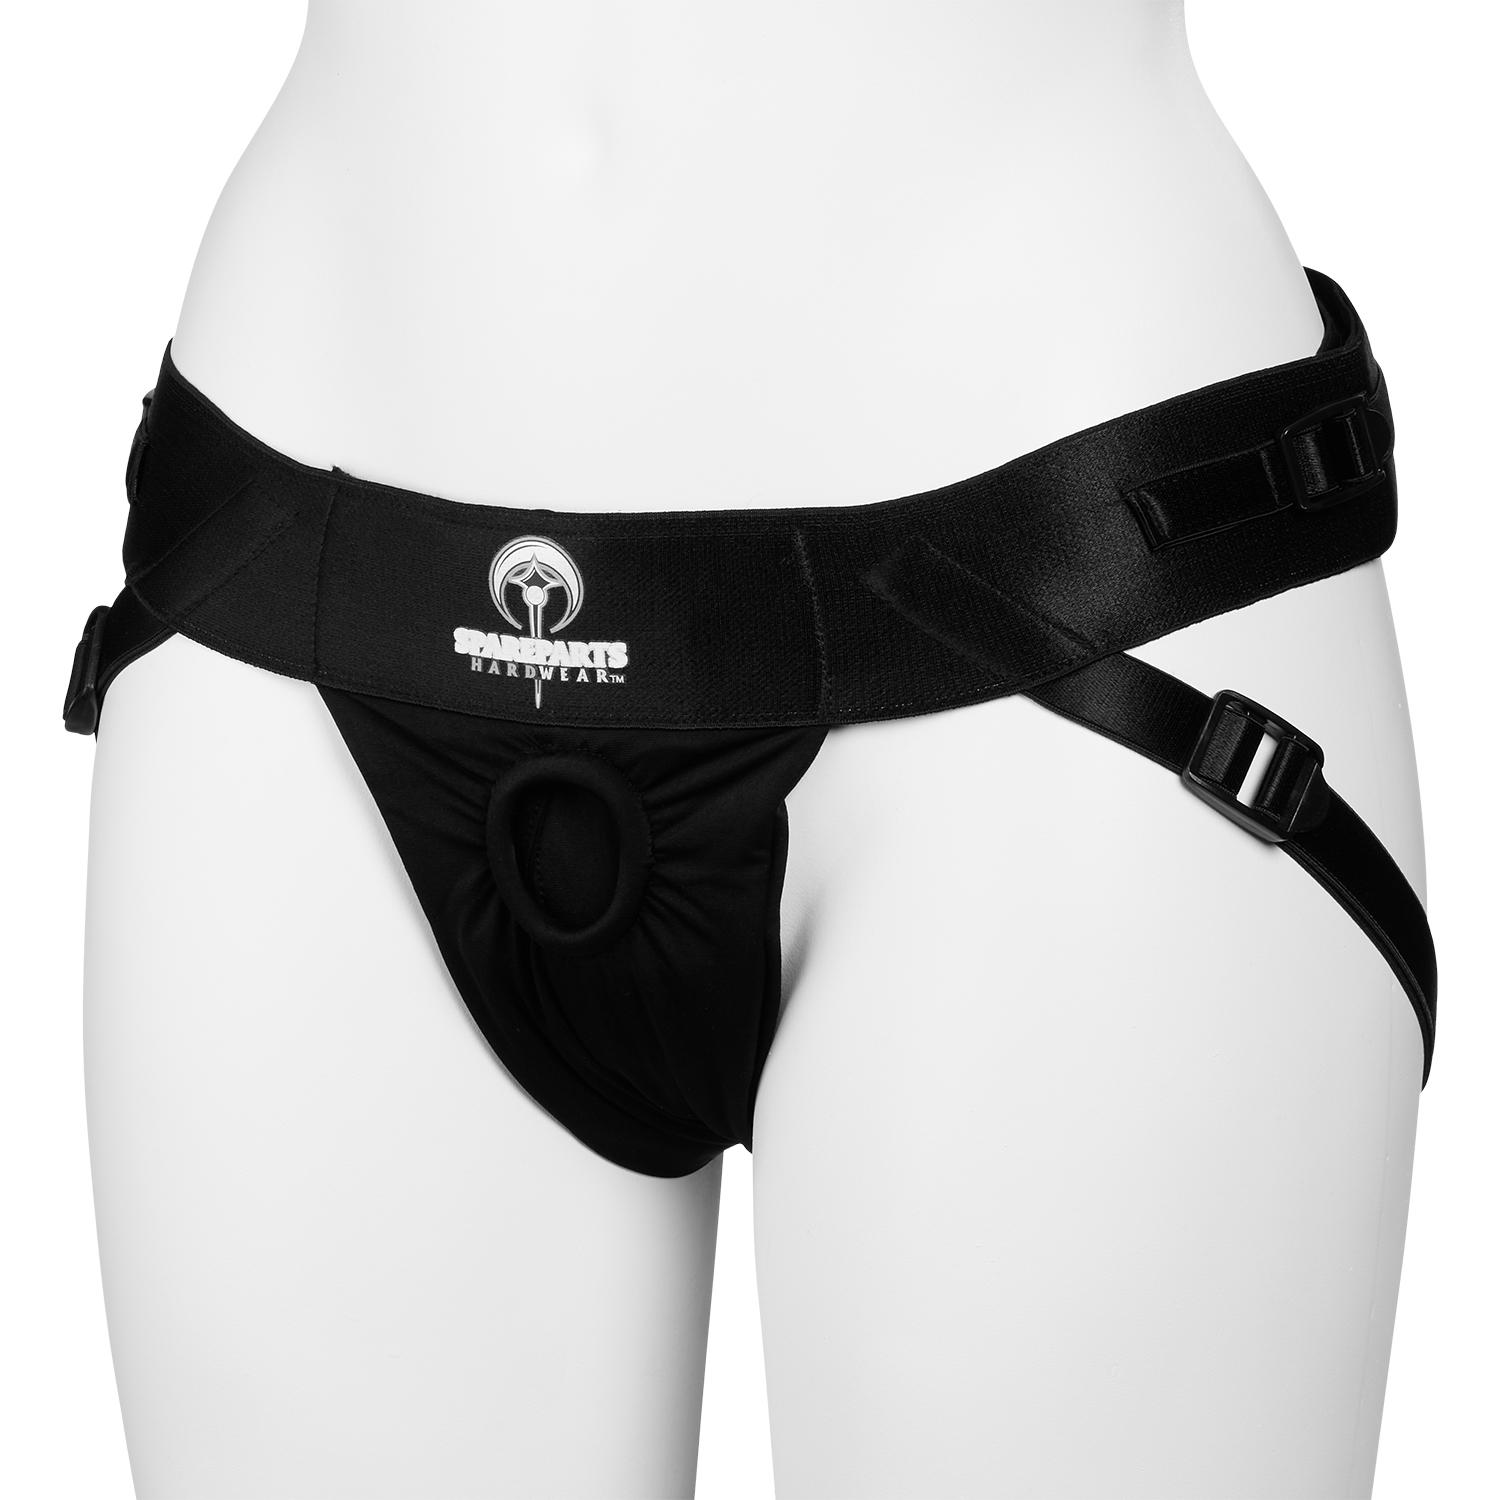 SpareParts HardWear Joque Unisex Harness - Black - L/XL